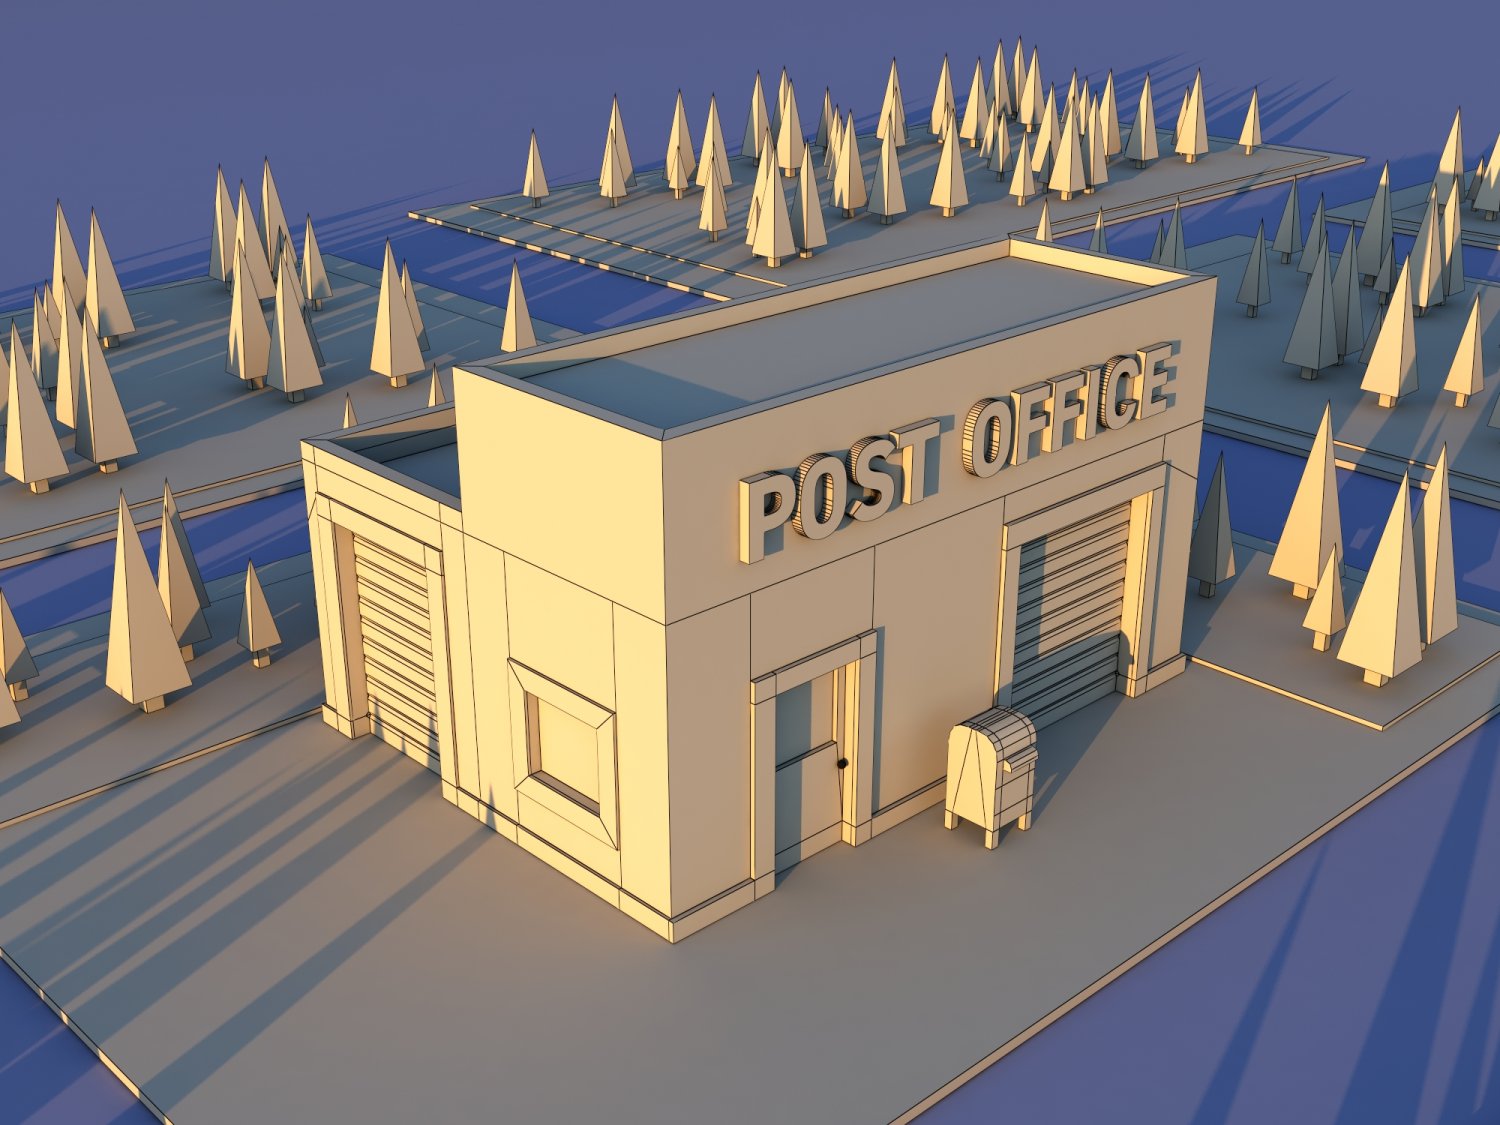 post office building cartoon